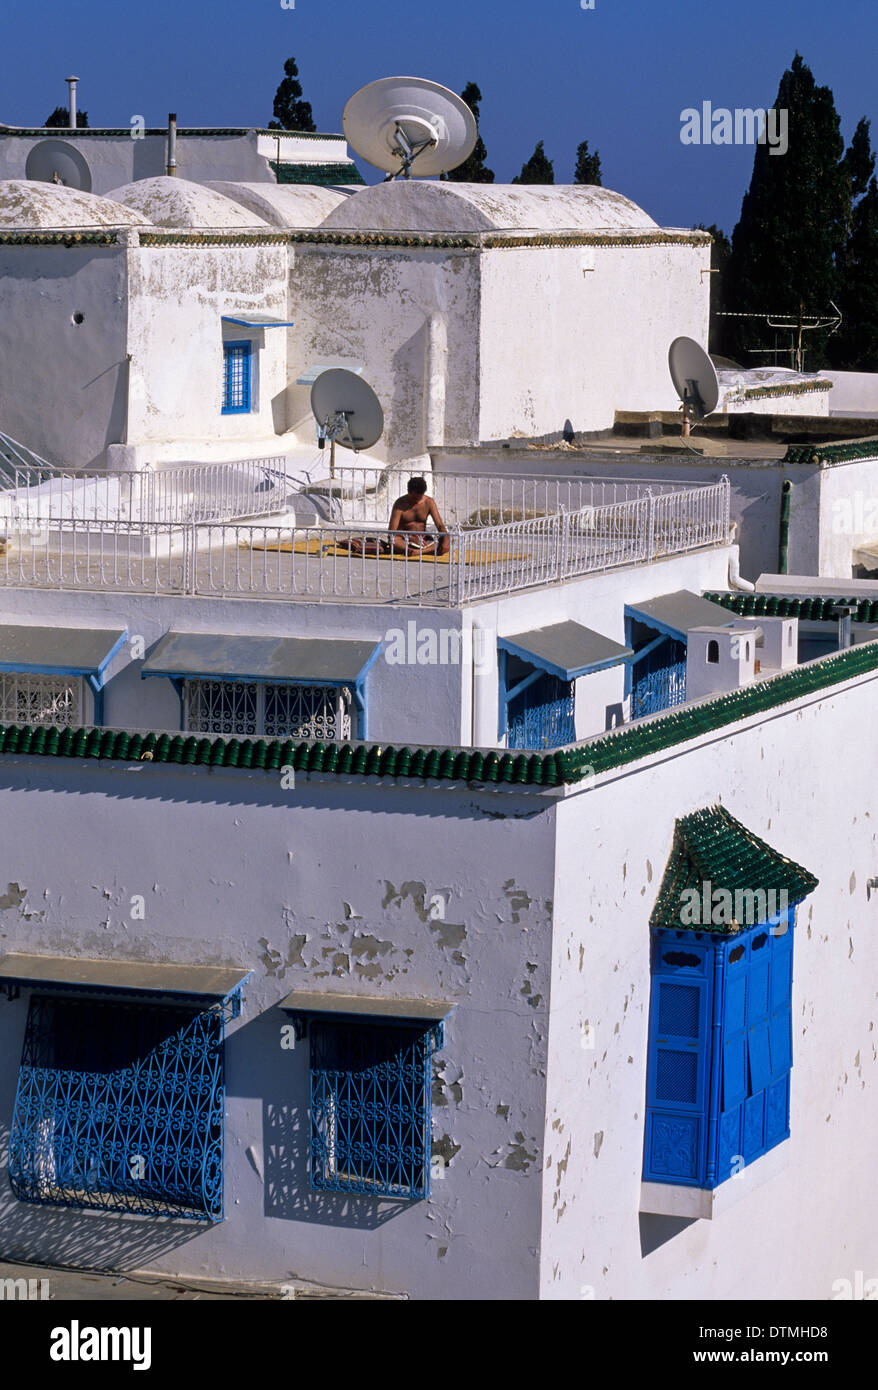 Tunisia, Sidi Bou Said. Rooftop Sun Bathing, Reading. Enclosed 'Harem Window' Lower Right. Stock Photo